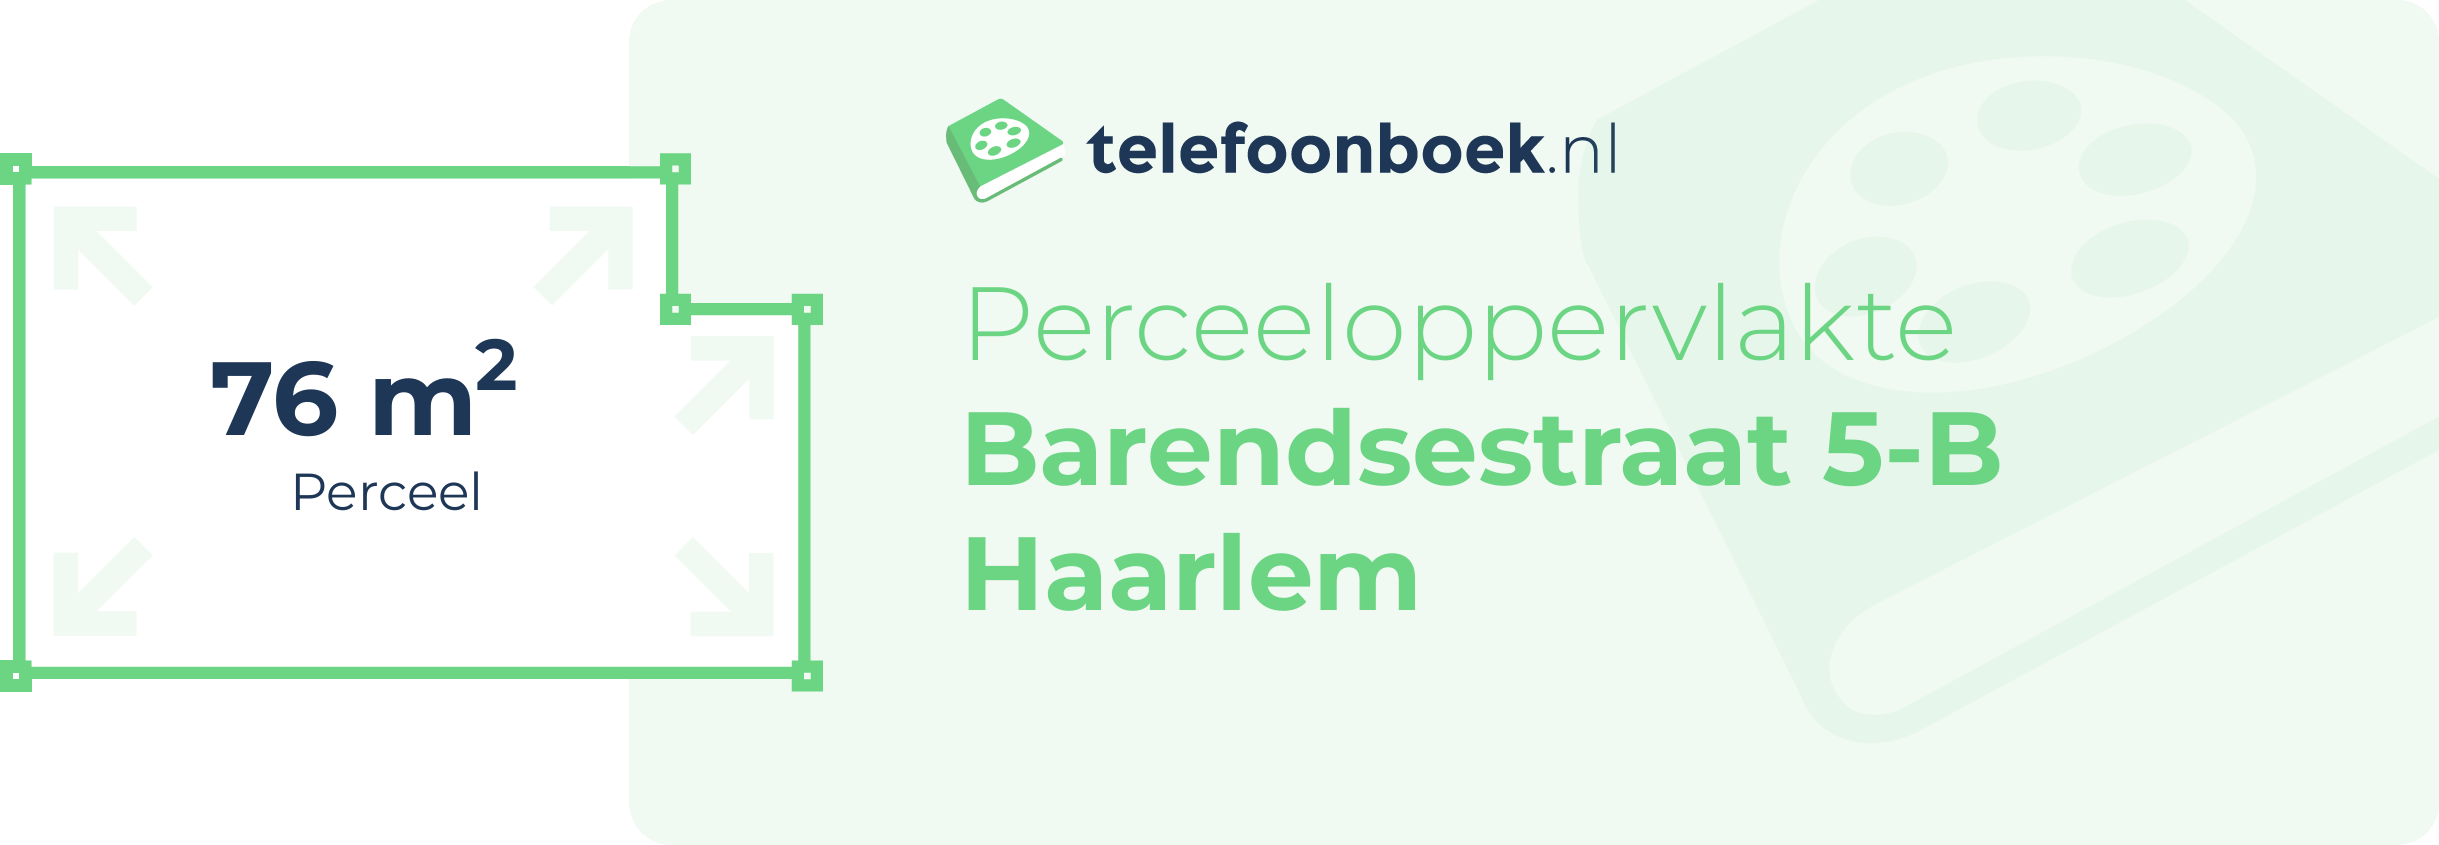 Perceeloppervlakte Barendsestraat 5-B Haarlem